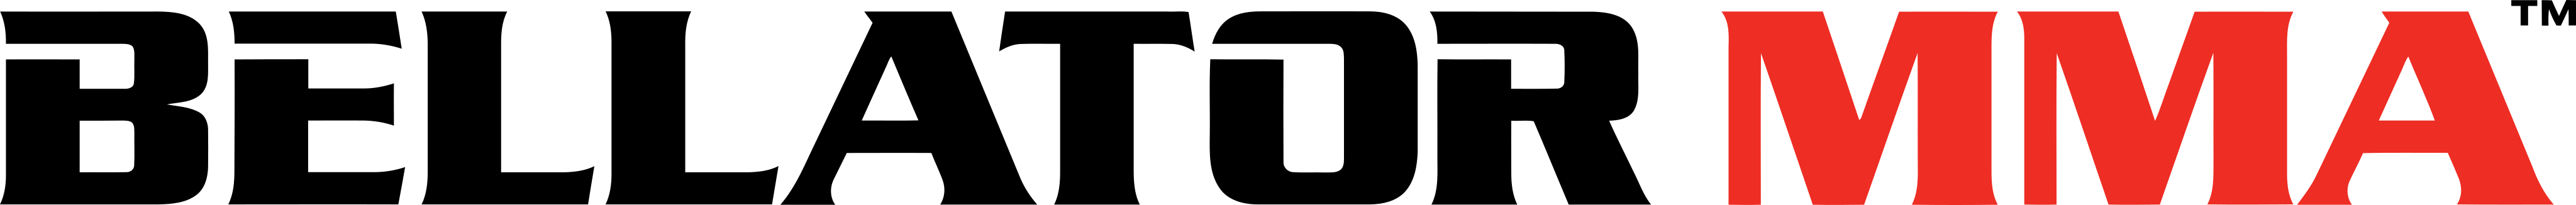 Bellator Logo.